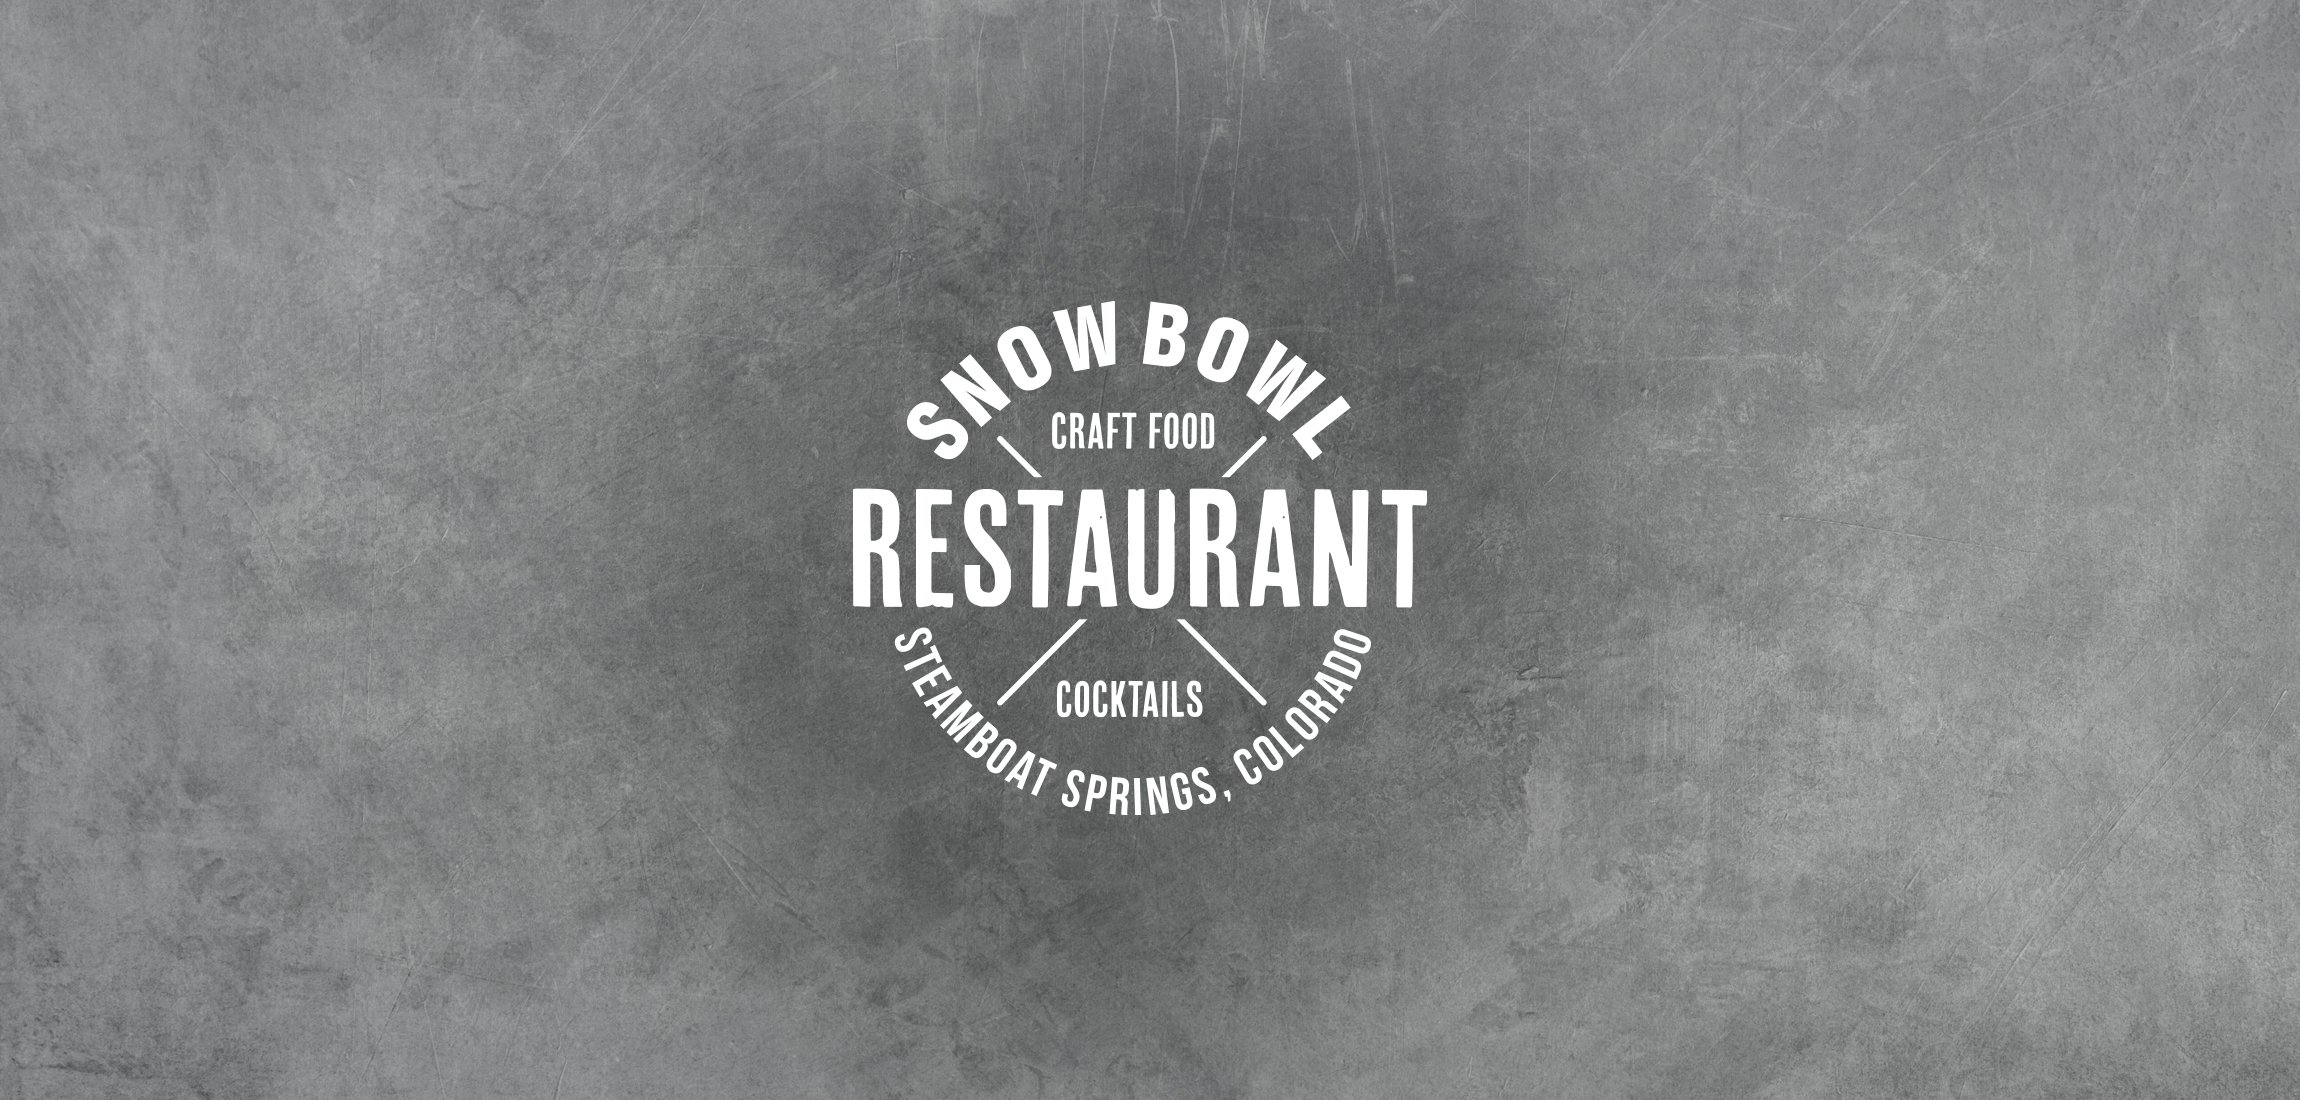 snow bowl logo.jpg